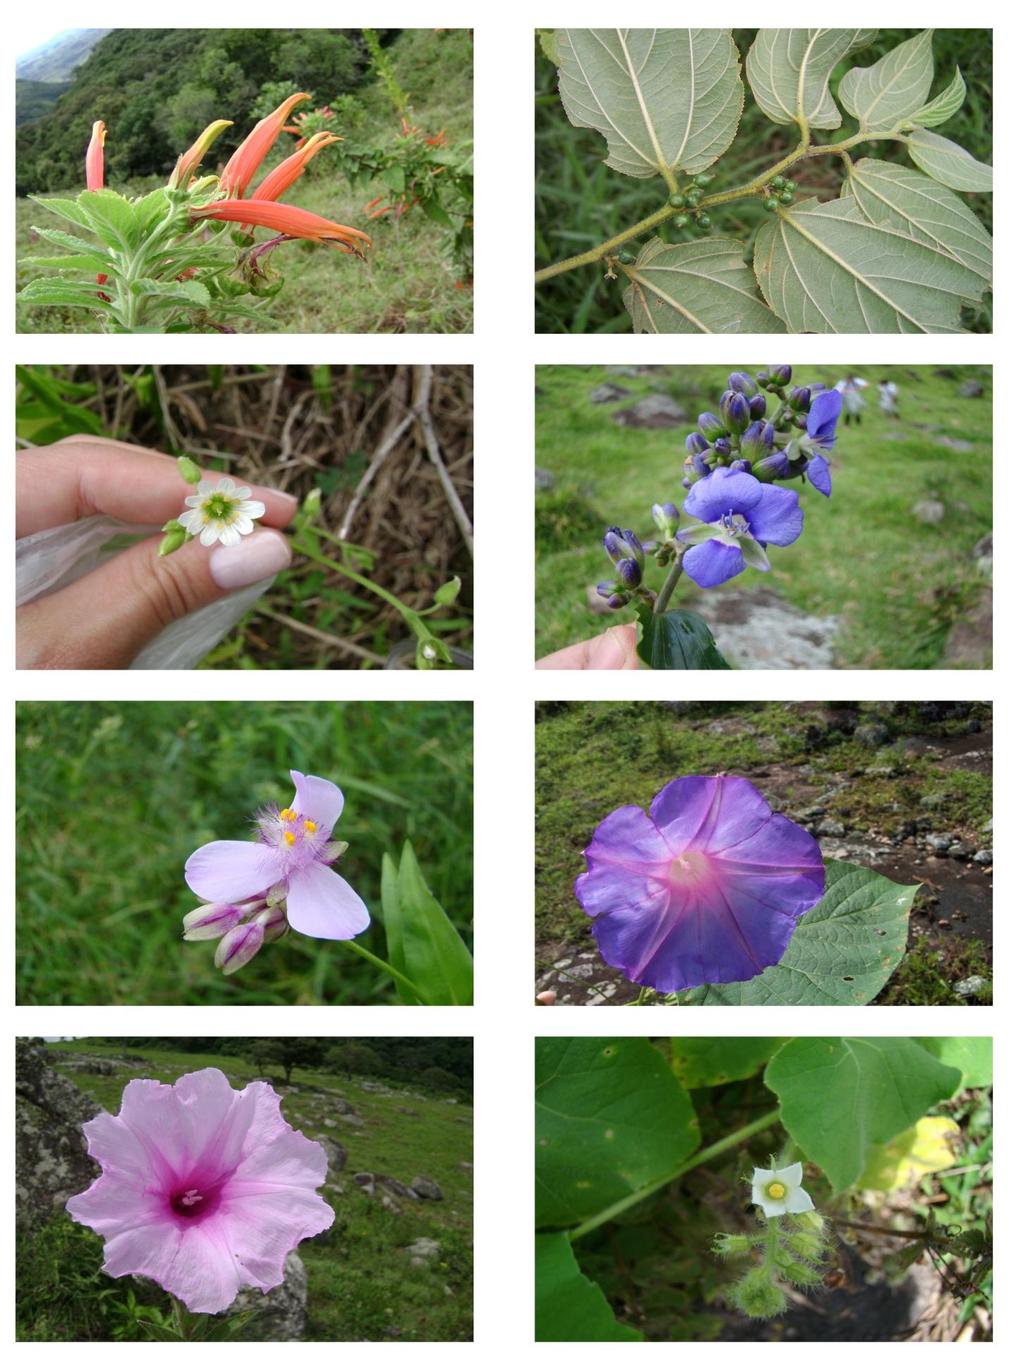 97 A B C D E F G Prancha 6: A: Campanulaceae, Siphocampylus macropodus, B: Cannabaceae, Celtis brasiliensis C: Caryophyllaceae, Cerastium sp.